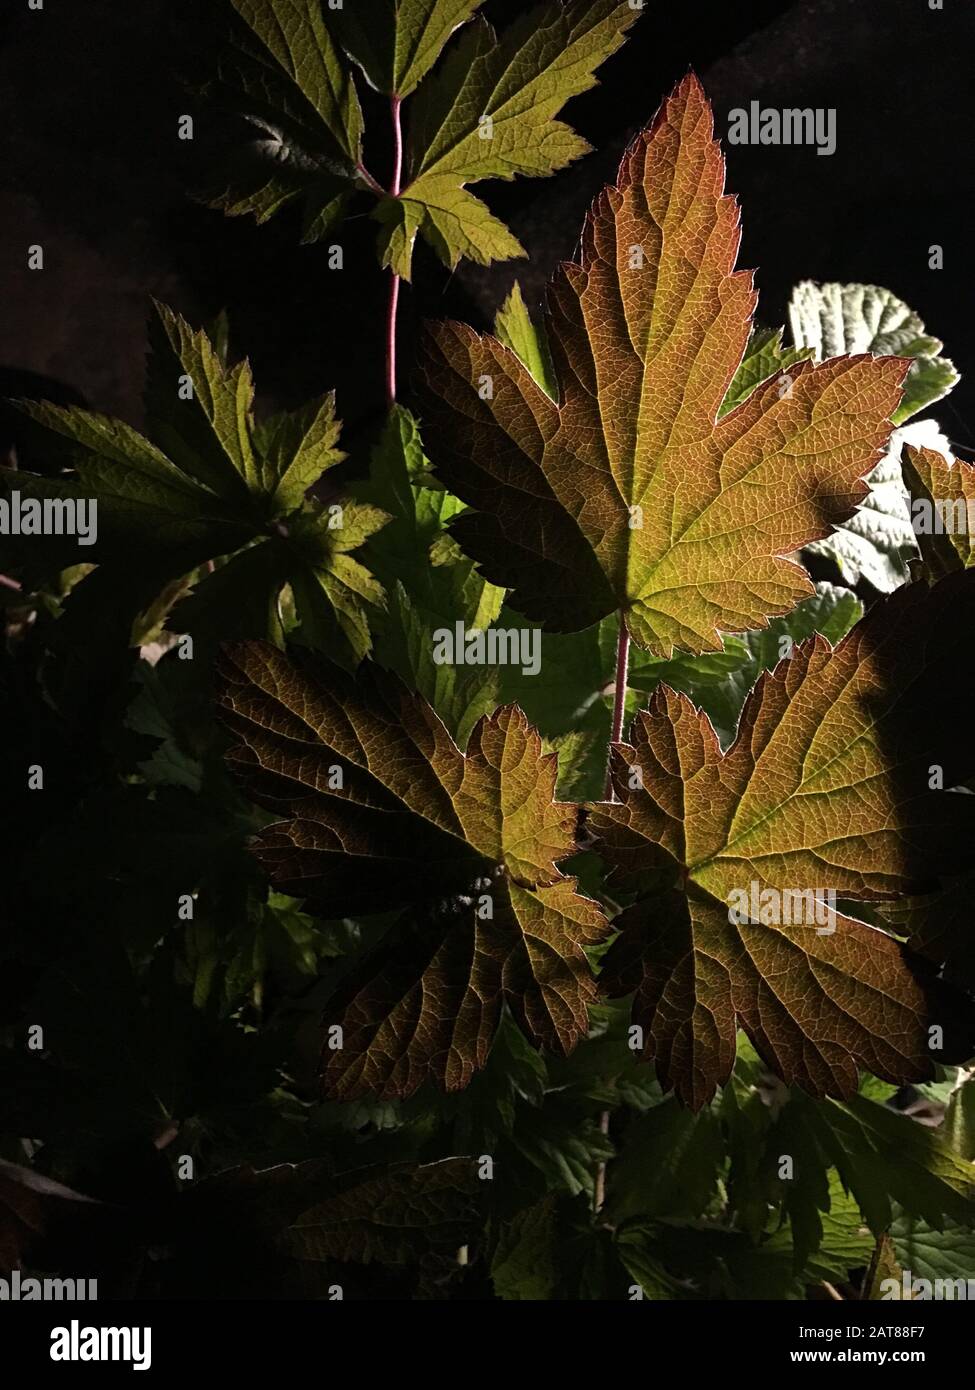 Anemone leaves against dark background Stock Photo